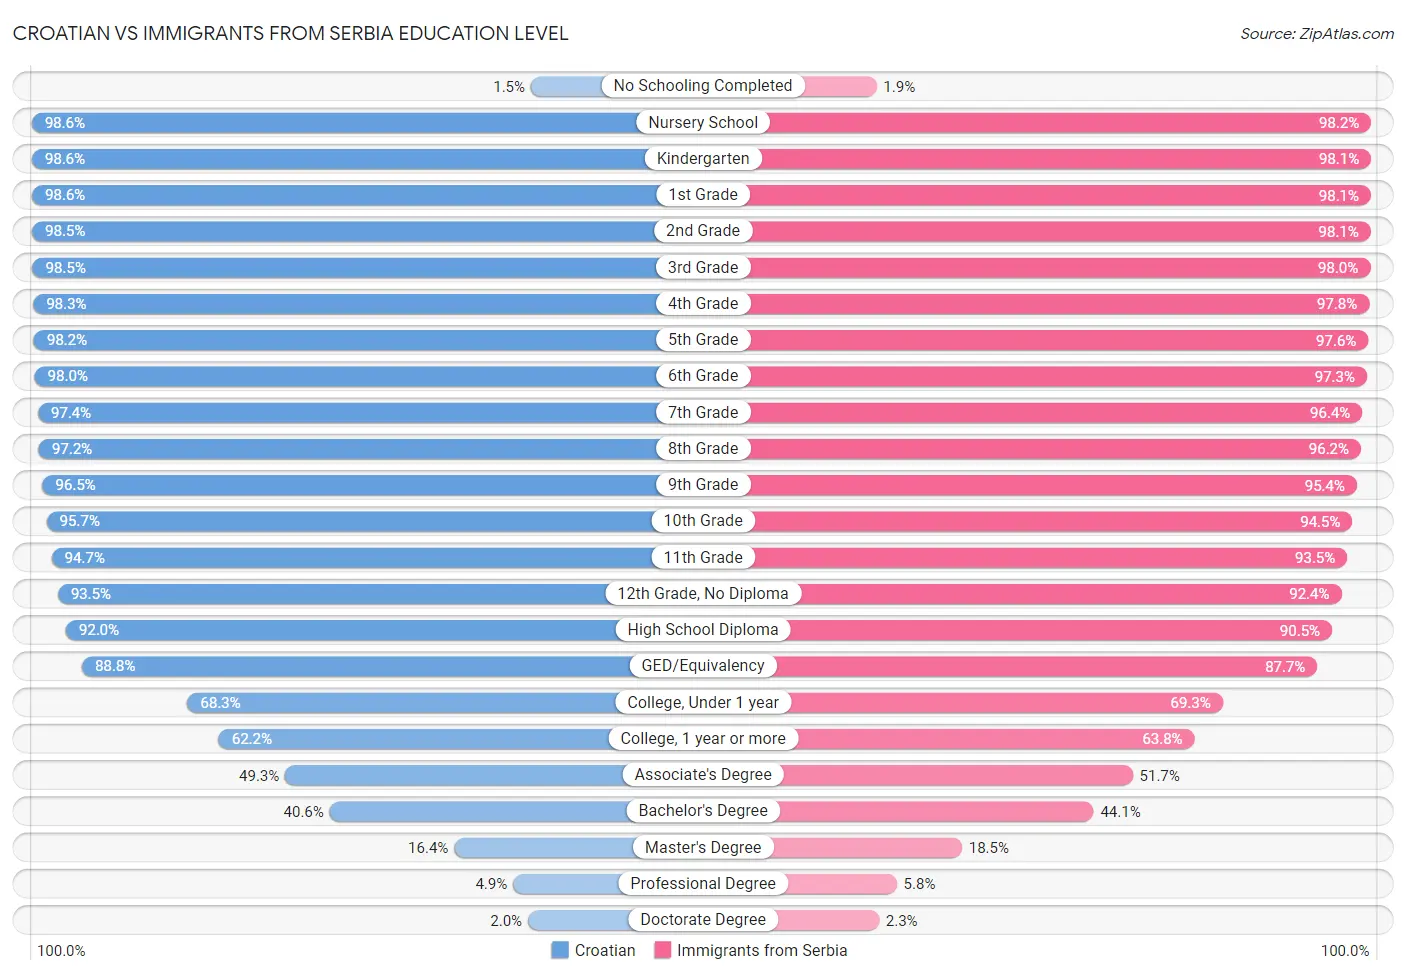 Croatian vs Immigrants from Serbia Education Level